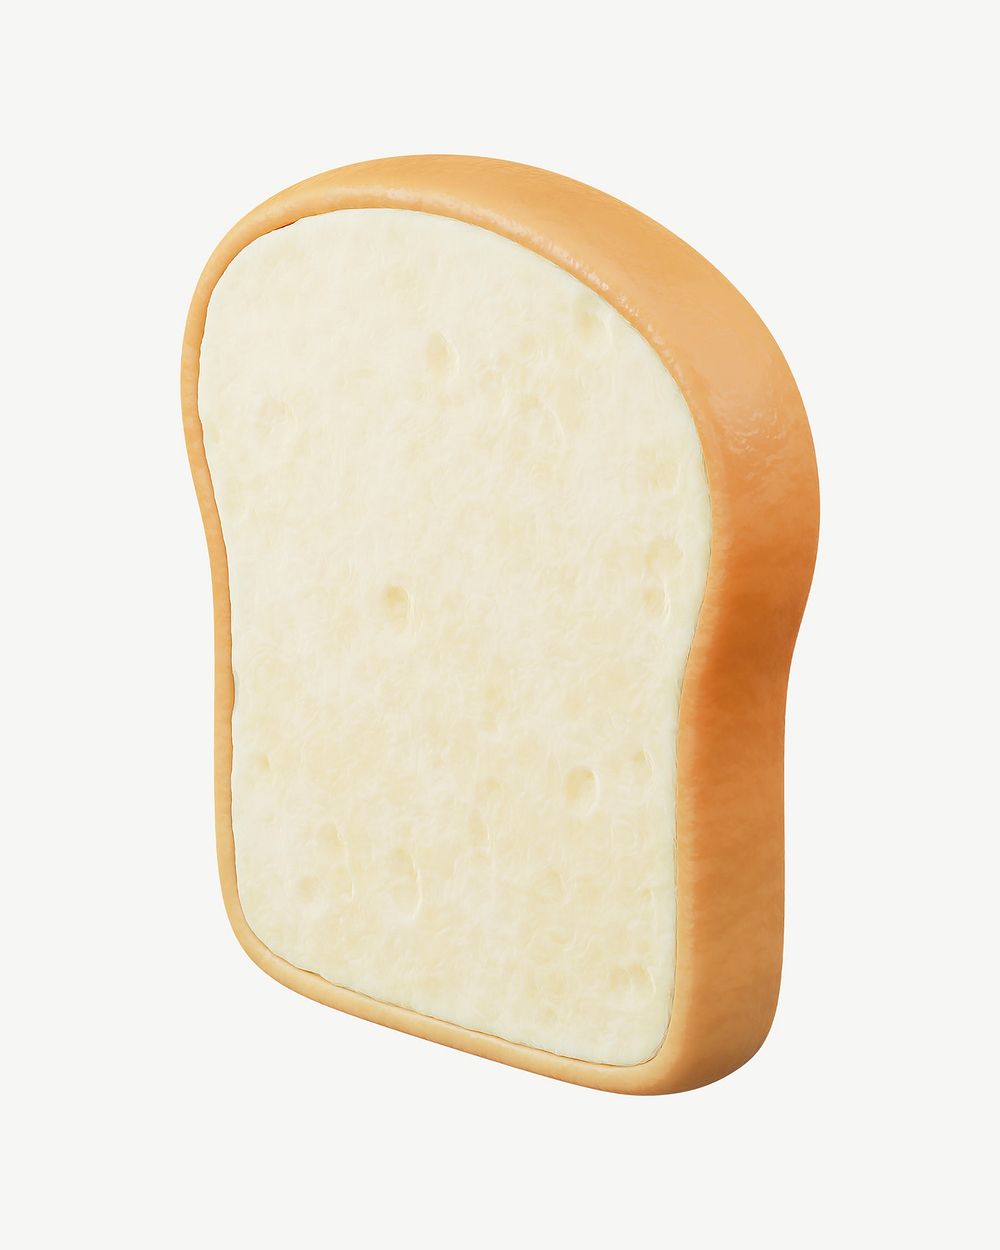 3D bread slice, collage element psd